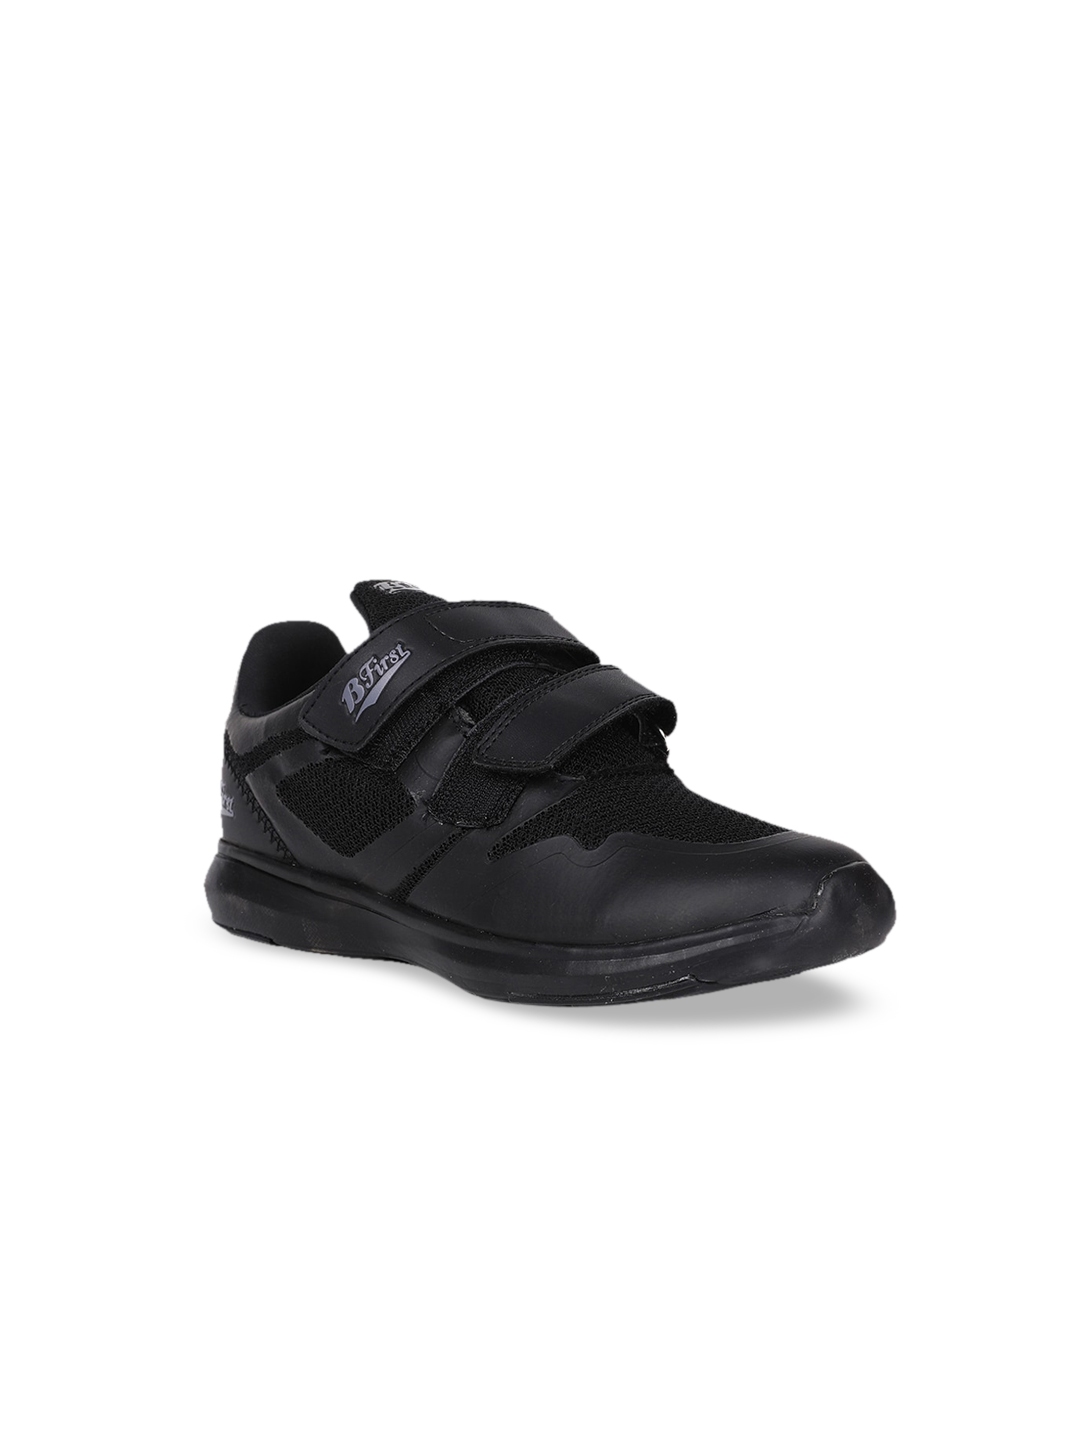 Buy Bata Boys Black Woven Design Sneakers - Casual Shoes for Boys ...